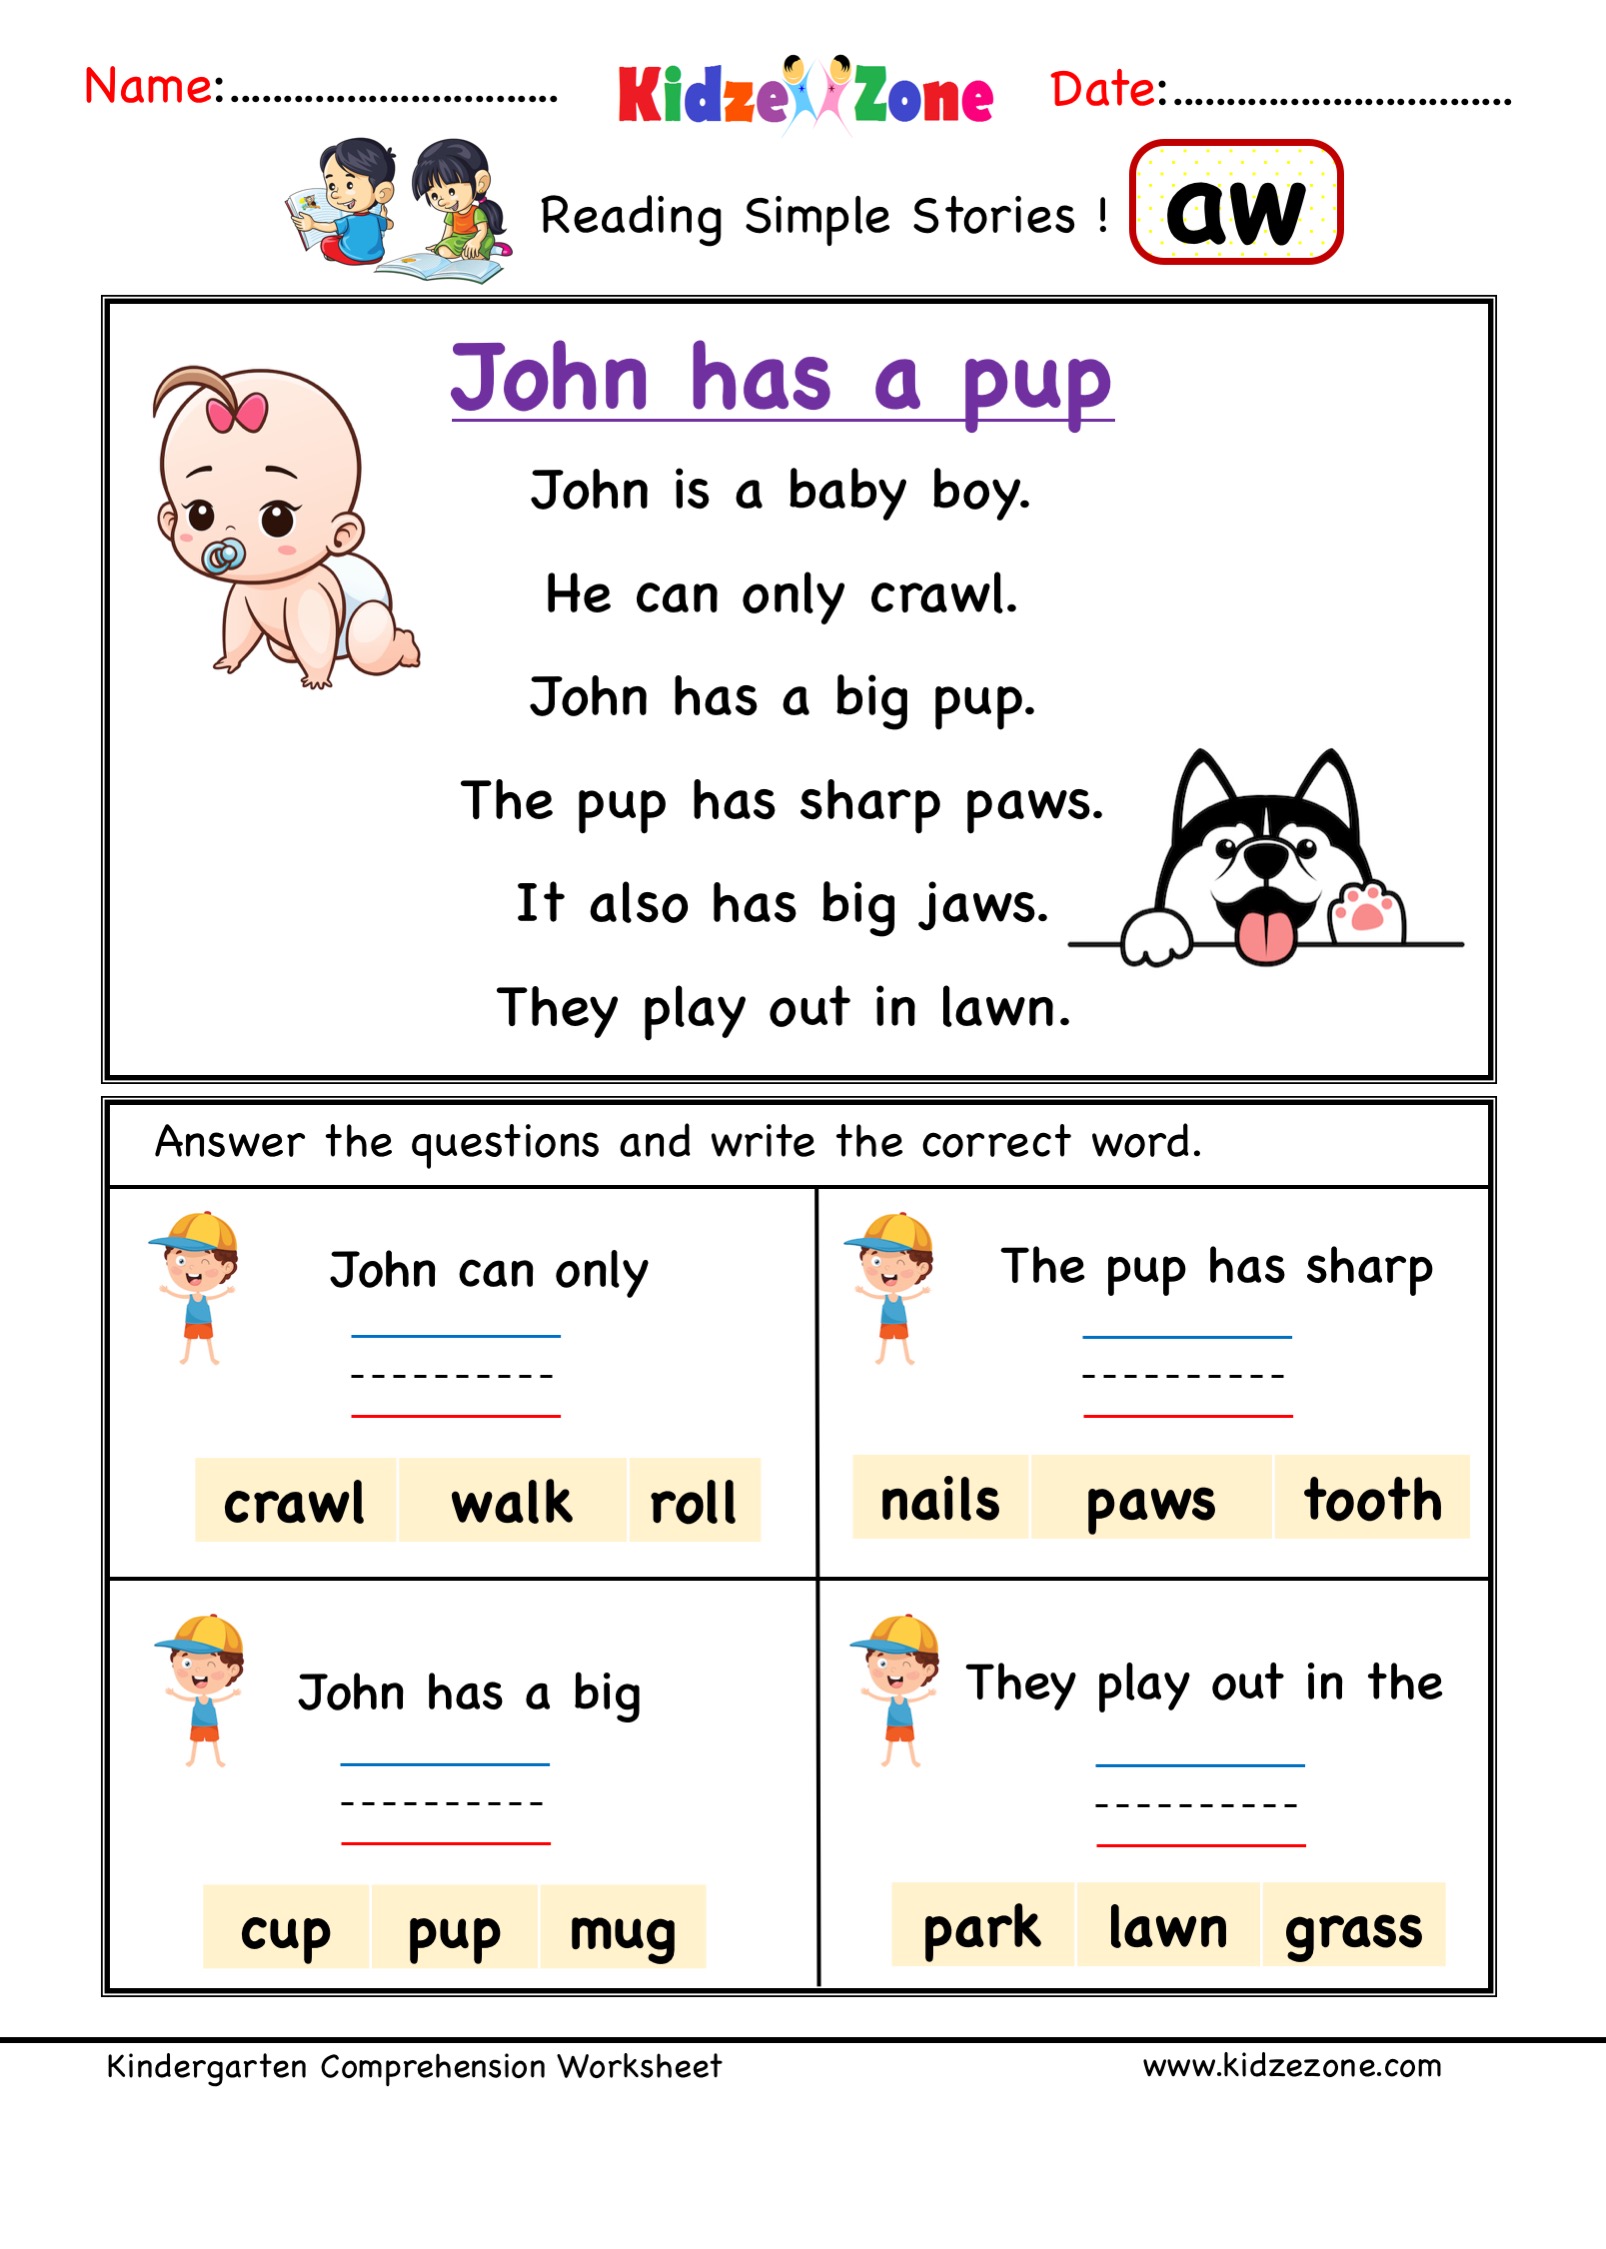 Kindergarten worksheets - aw word family -Comprehension 2